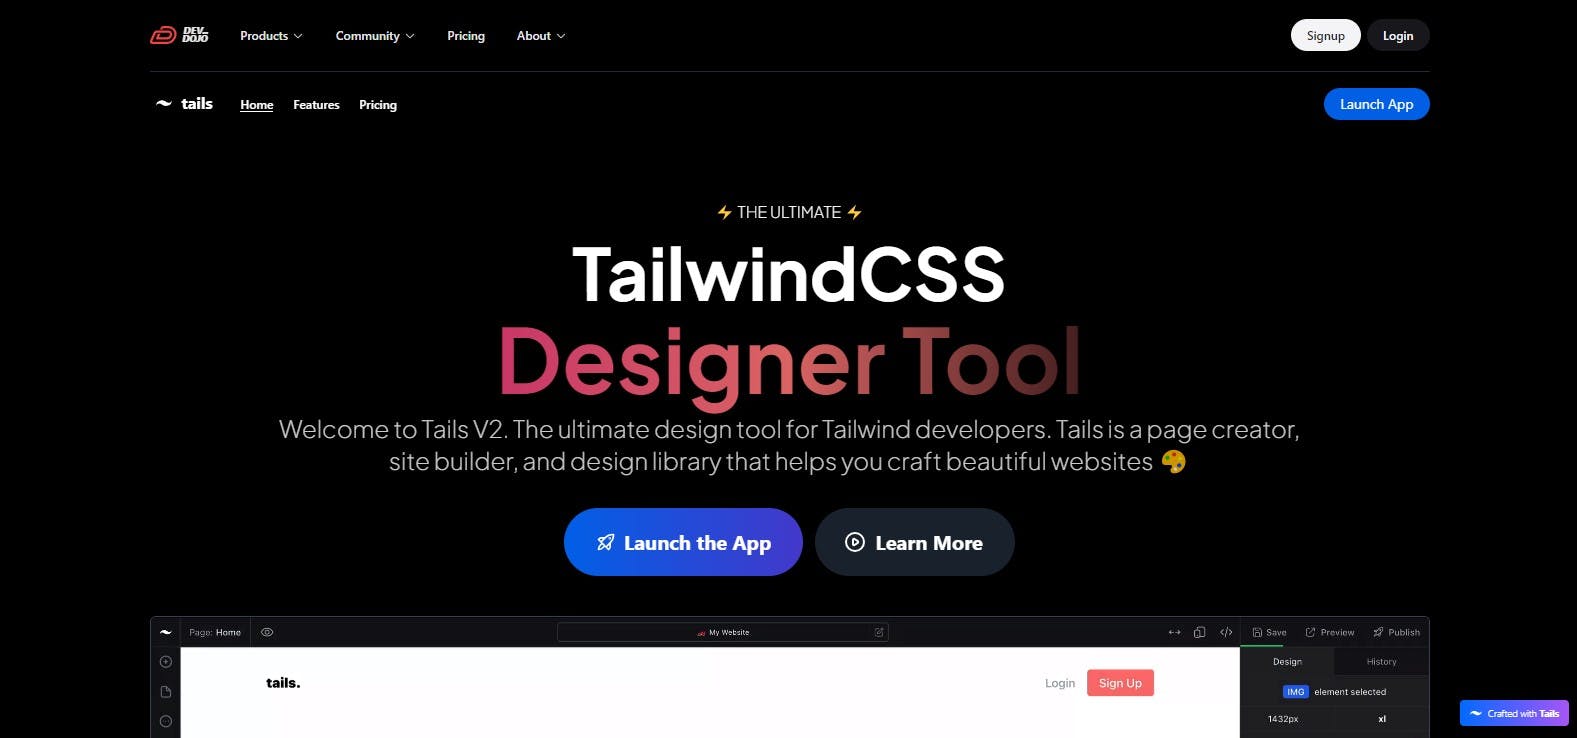 Tailwind CSS Designer Tool